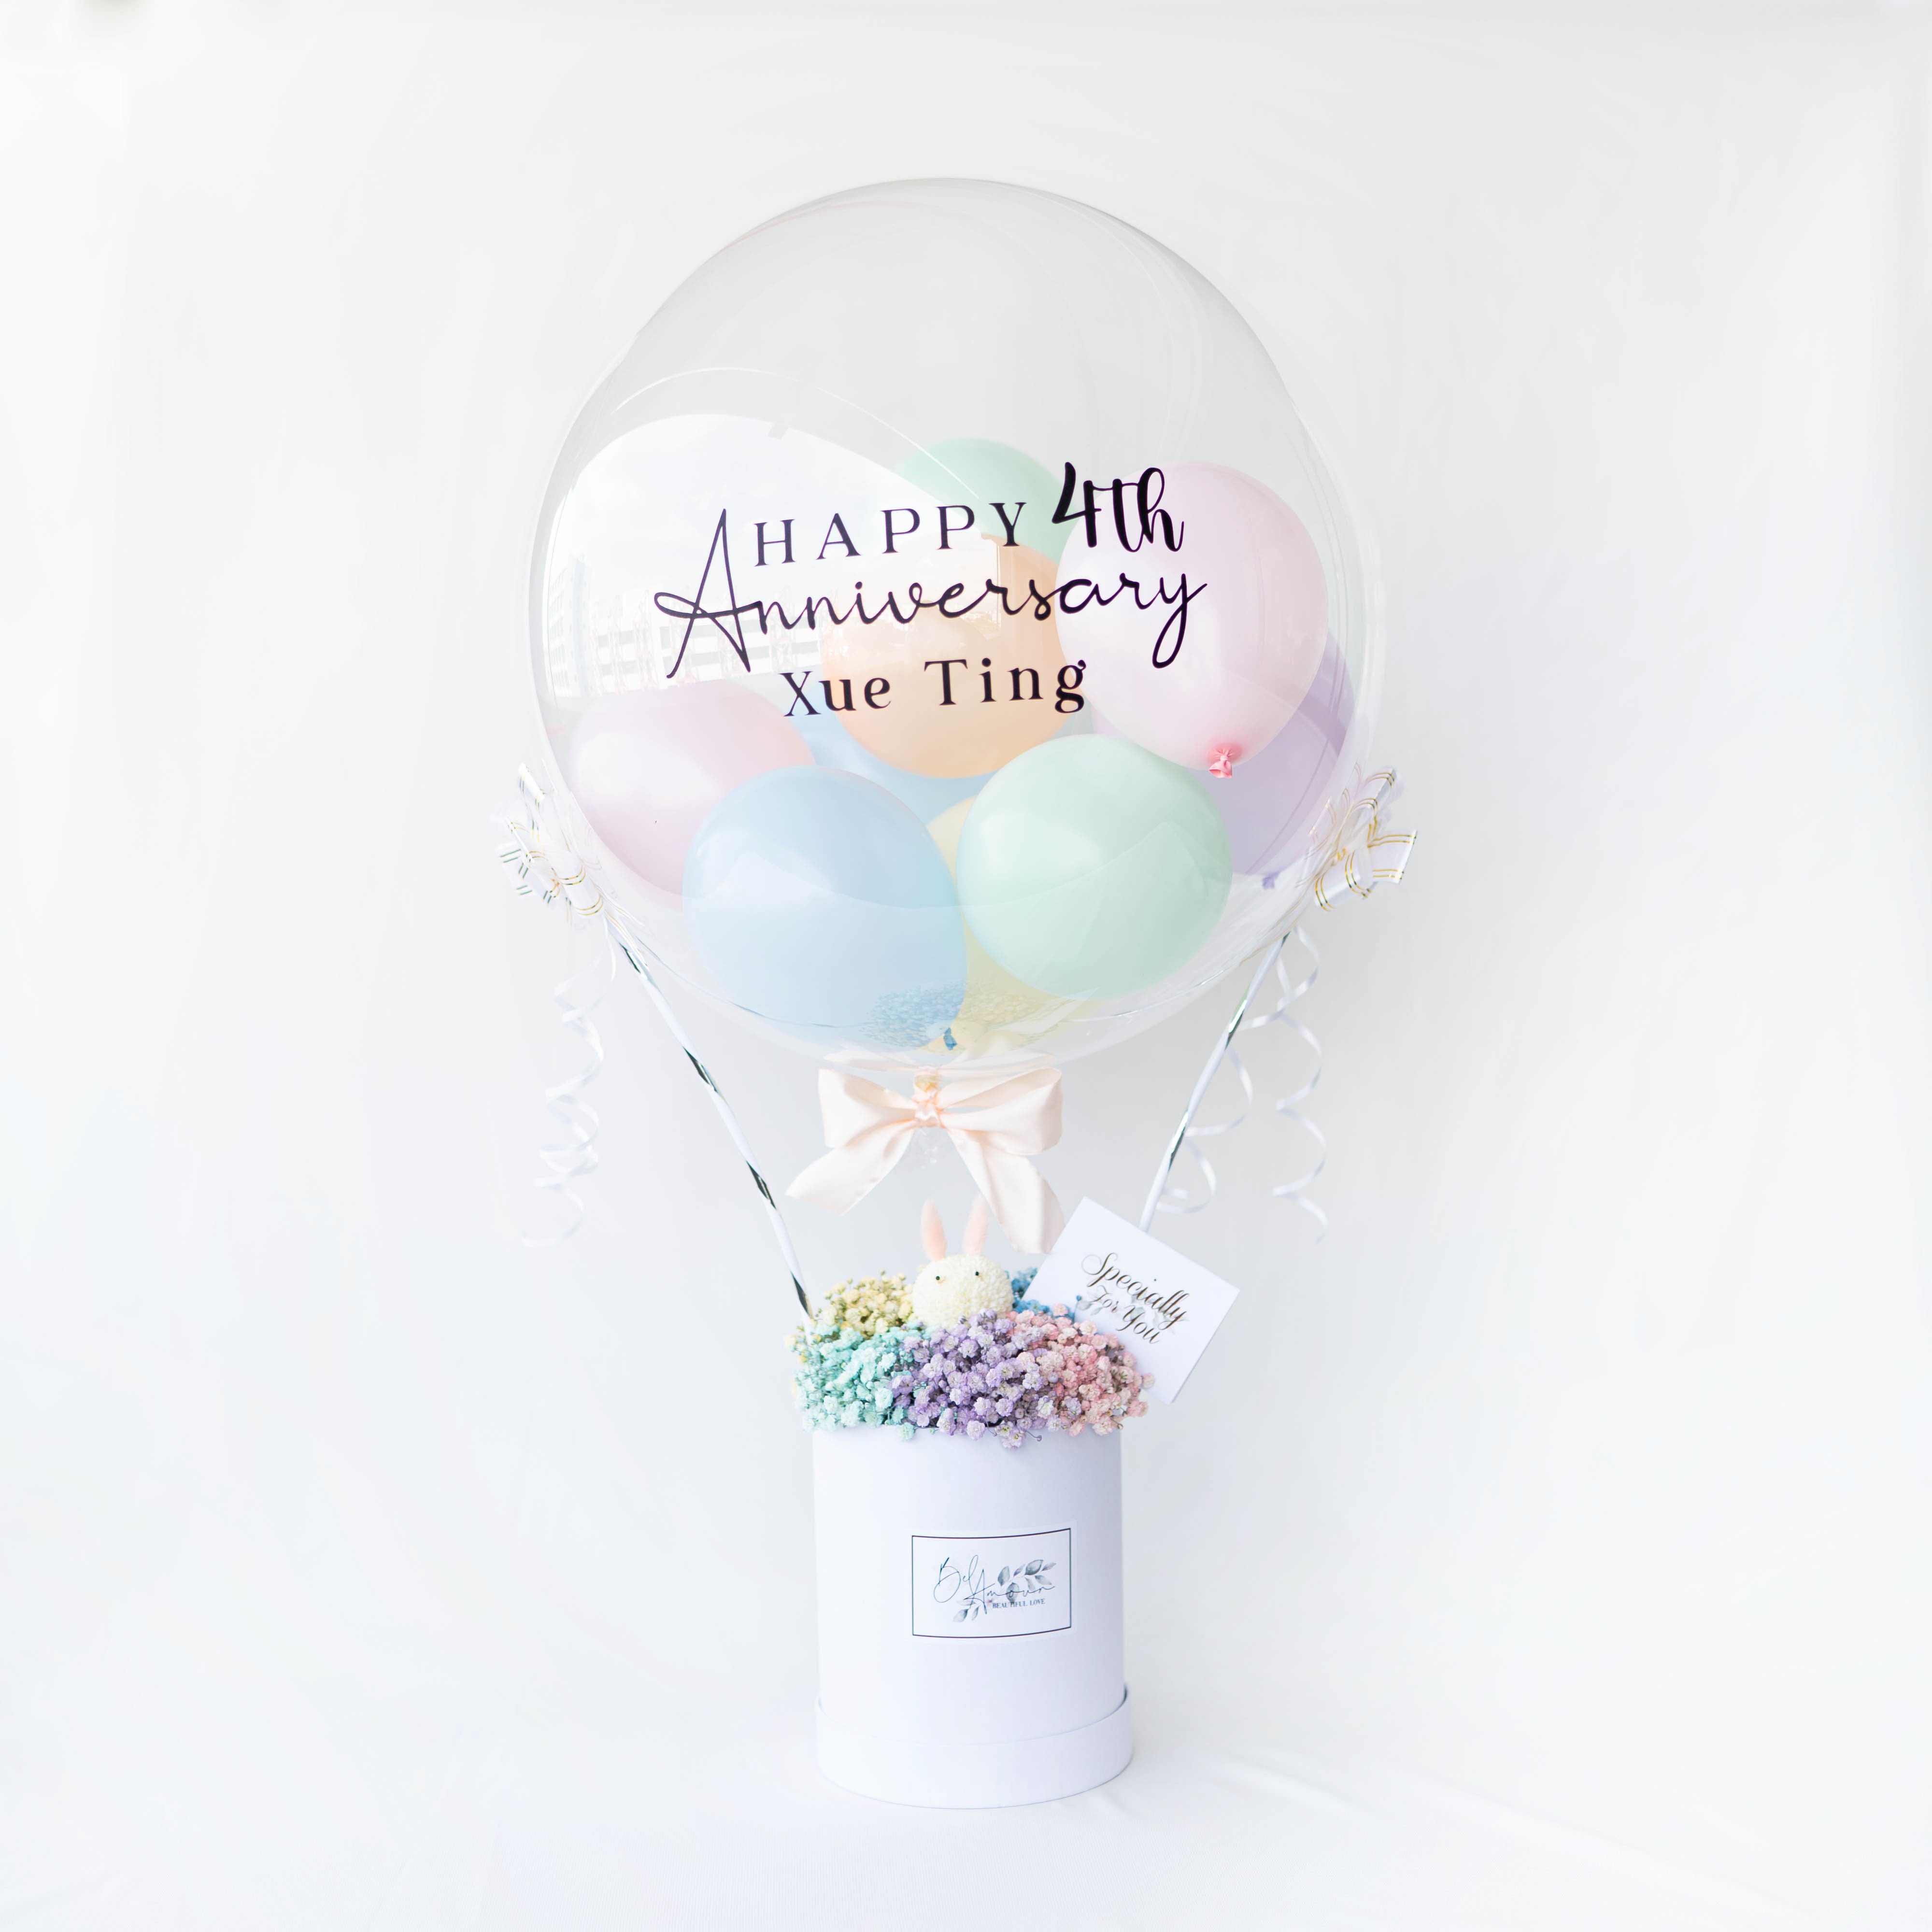 Custom Hot Air Balloon with Baby's Breath